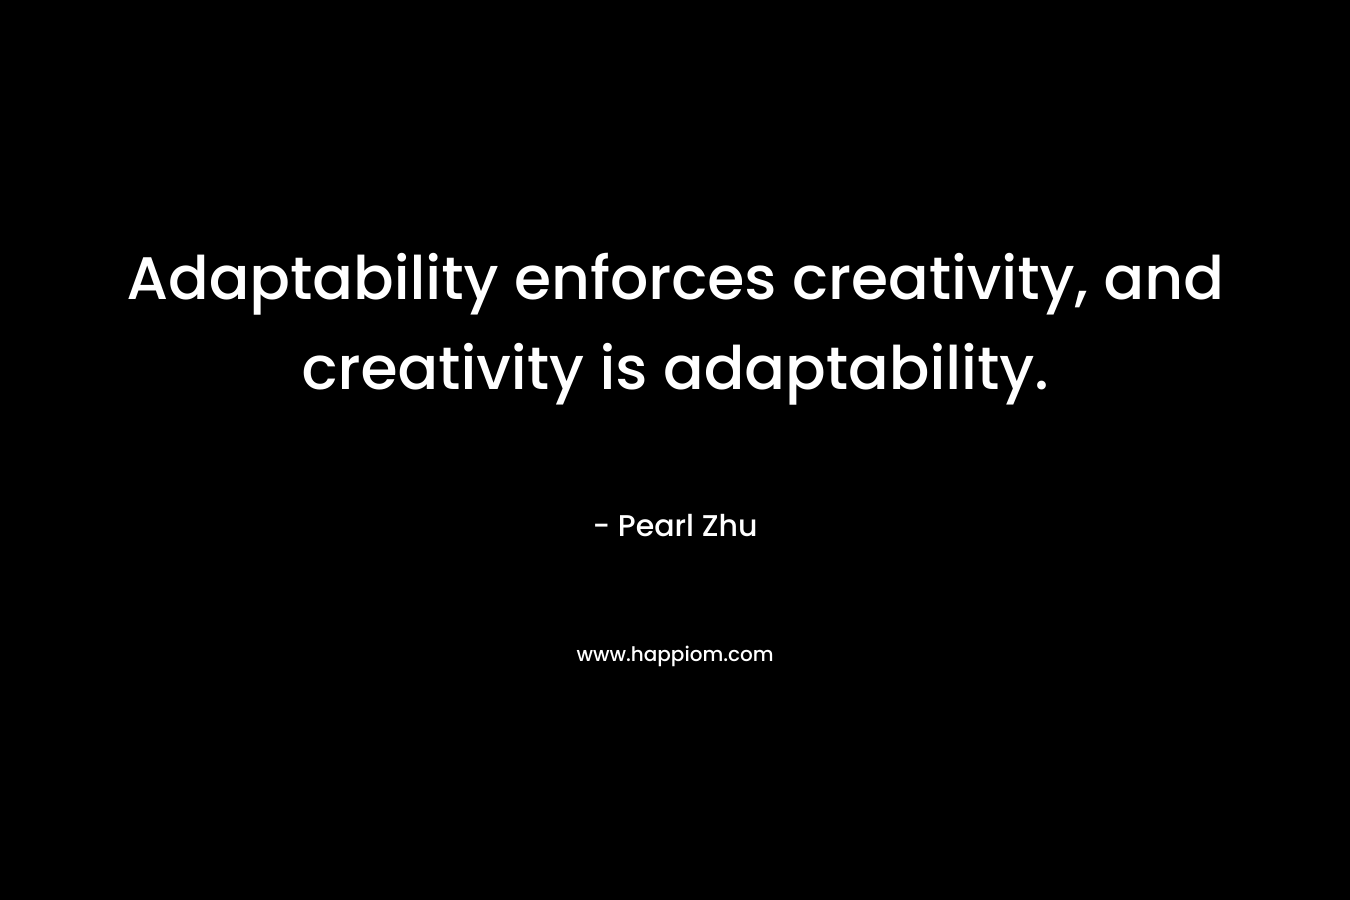 Adaptability enforces creativity, and creativity is adaptability. – Pearl Zhu